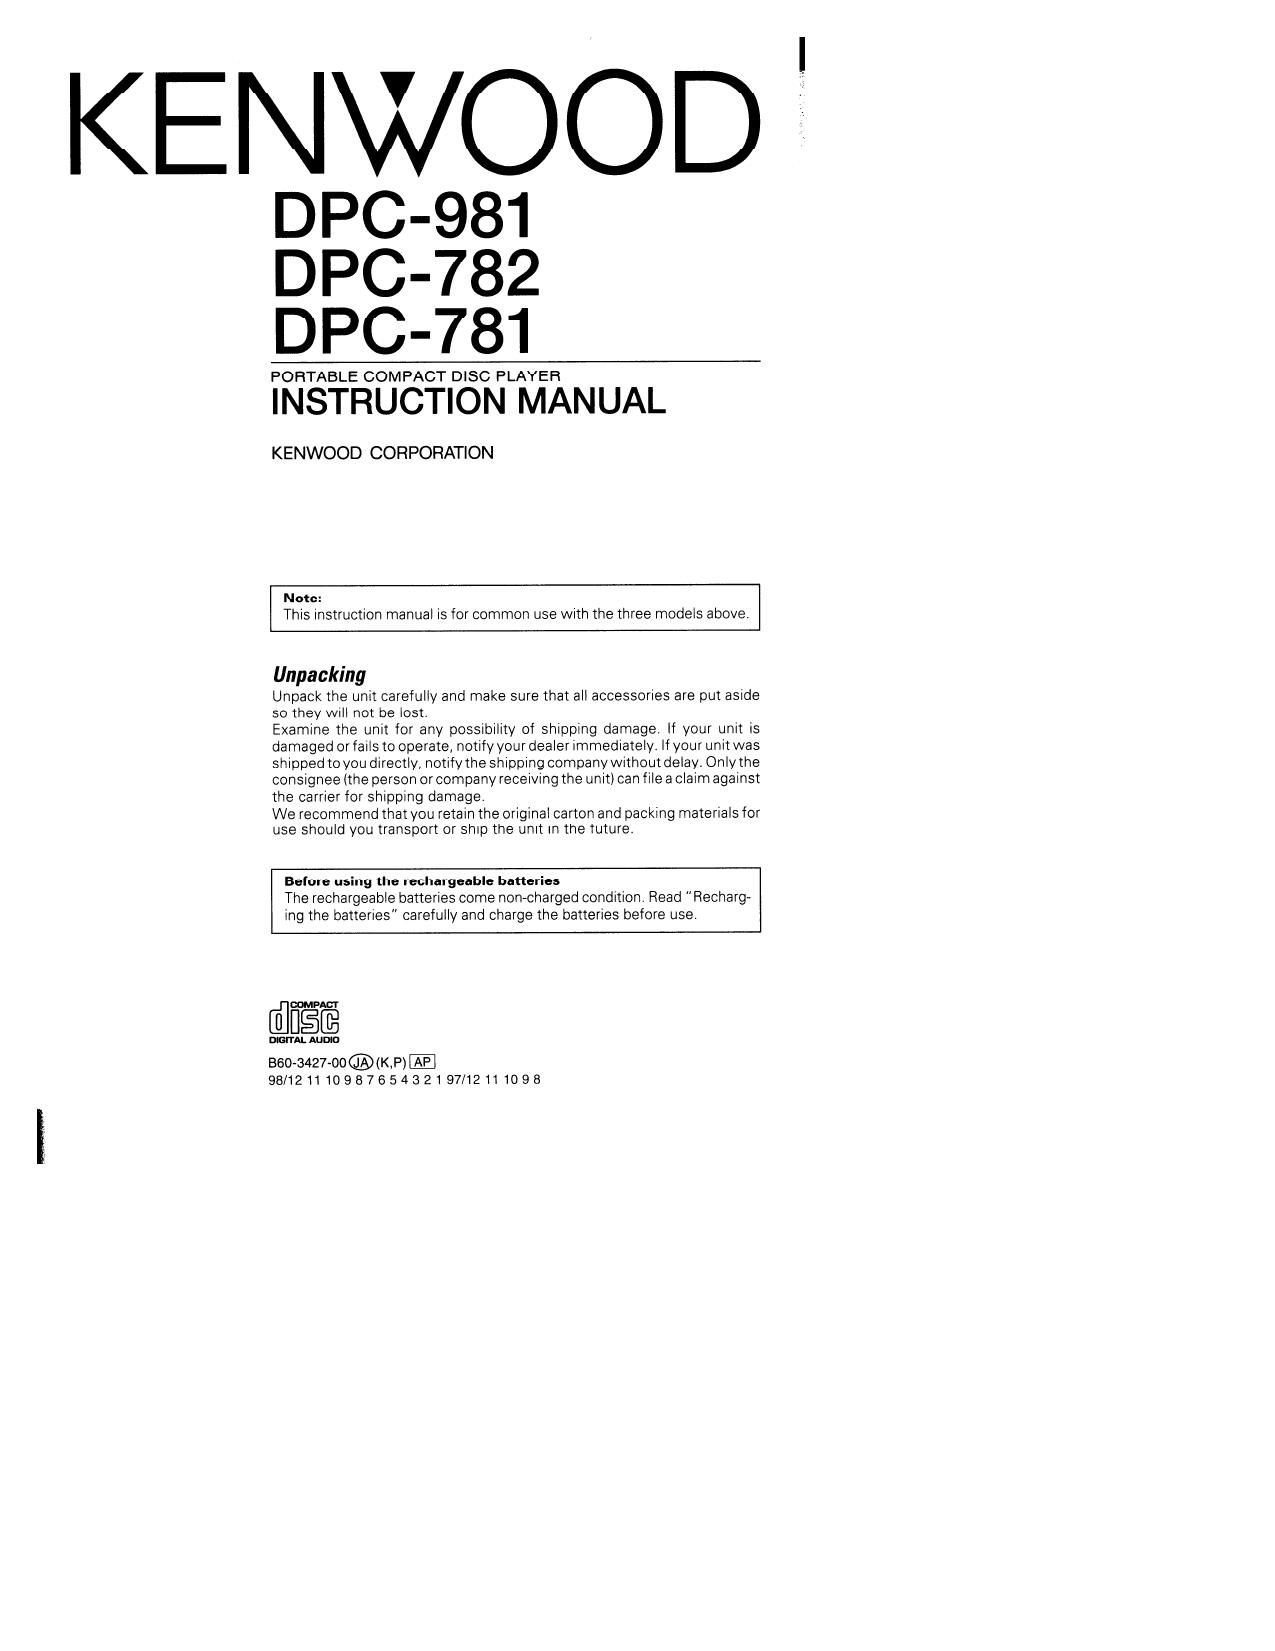 Kenwood DPC 781 Owners Manual